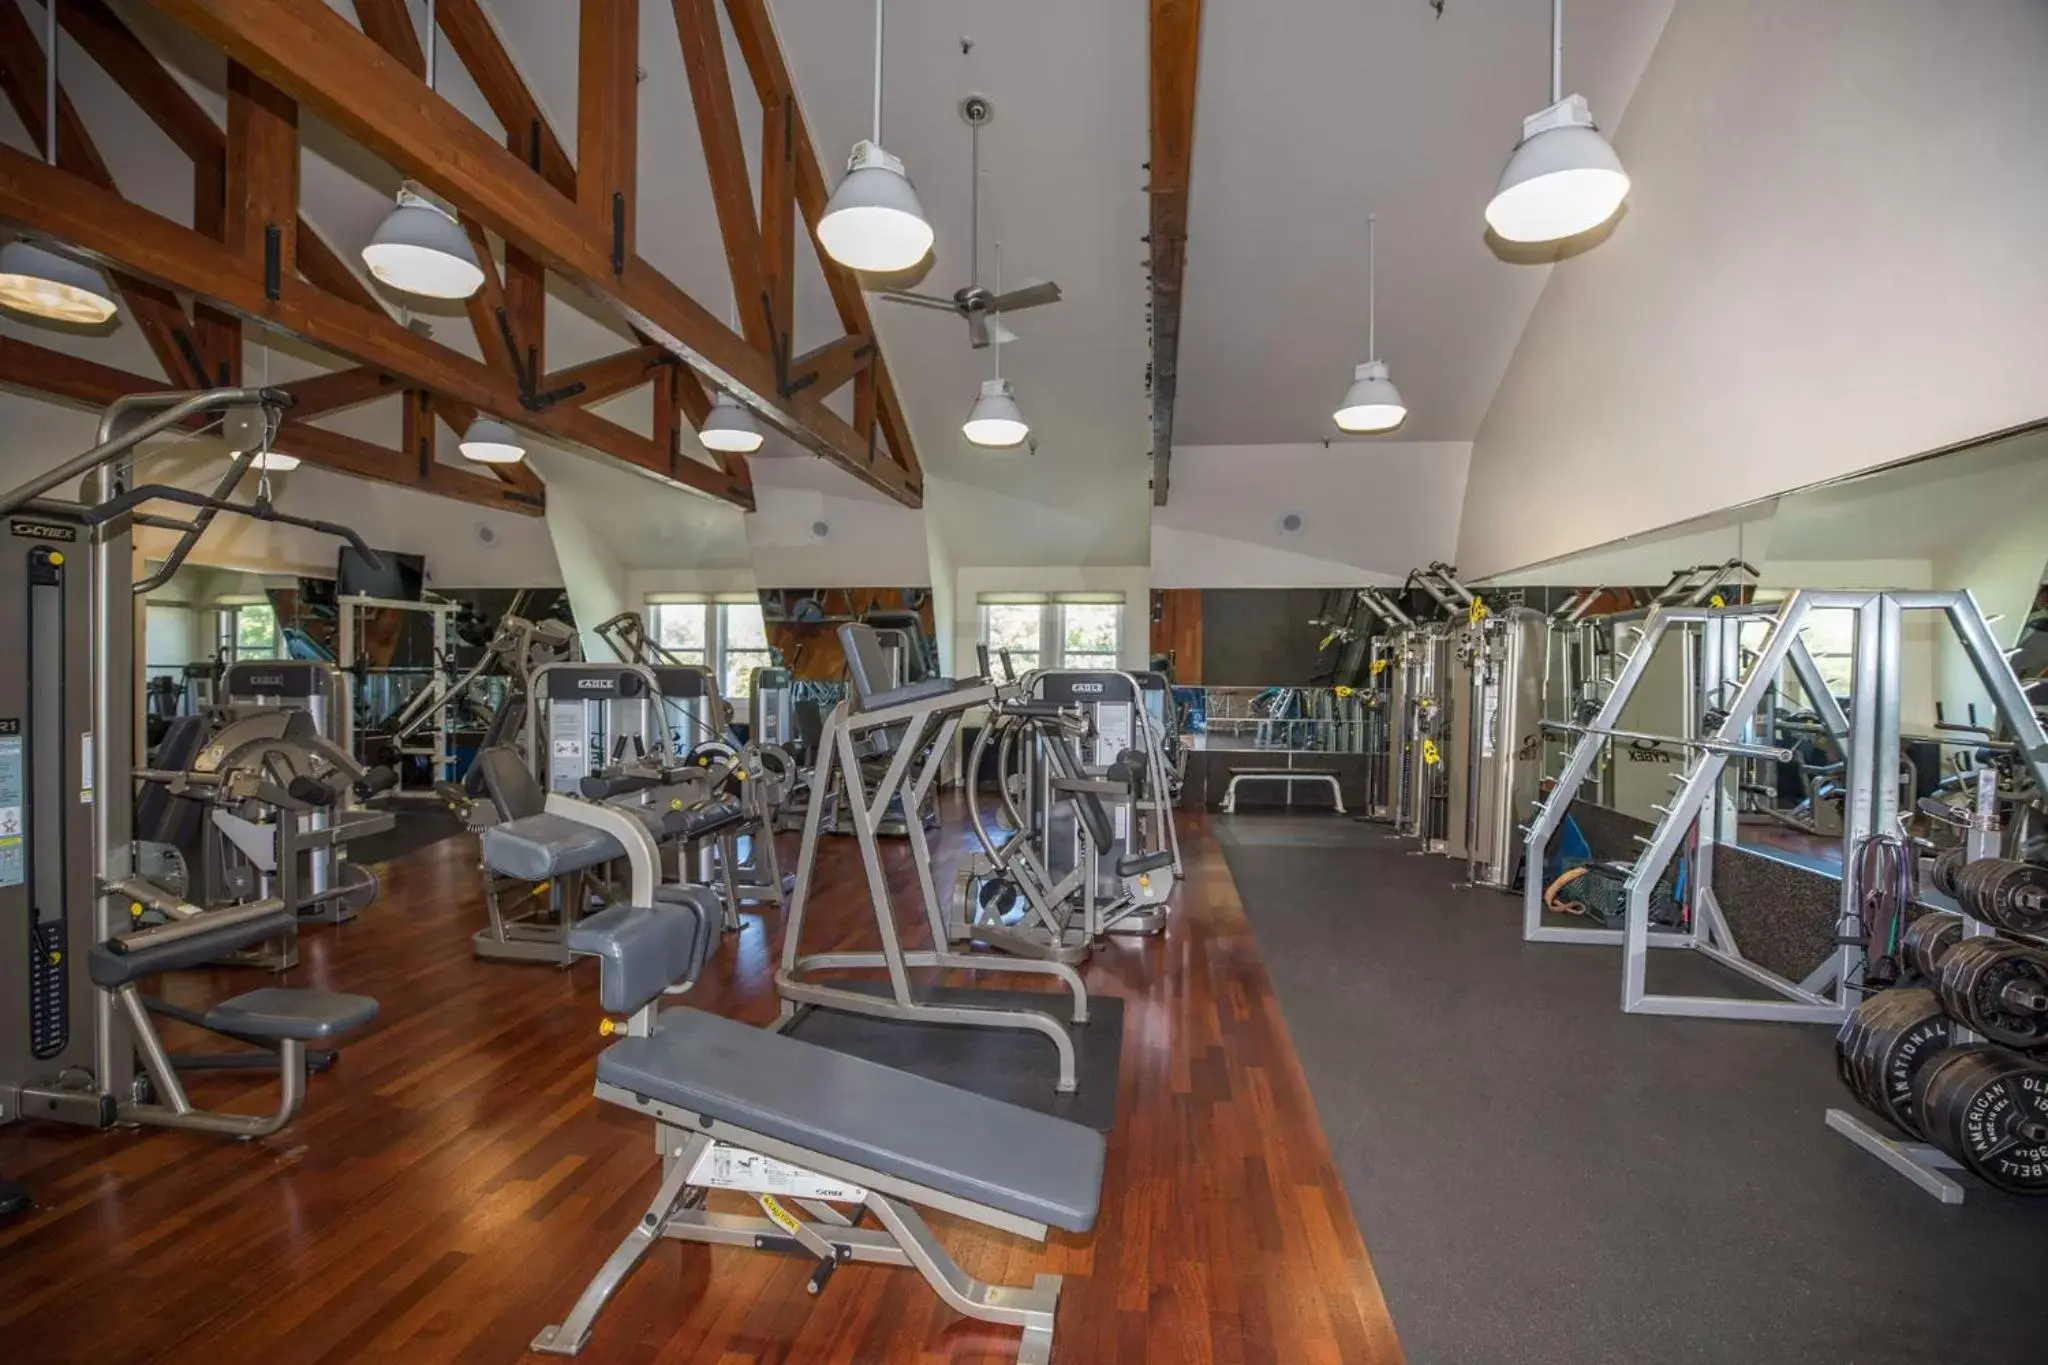 Fitness centre/facilities, Fitness Center/Facilities in Flamingo Resort & Spa